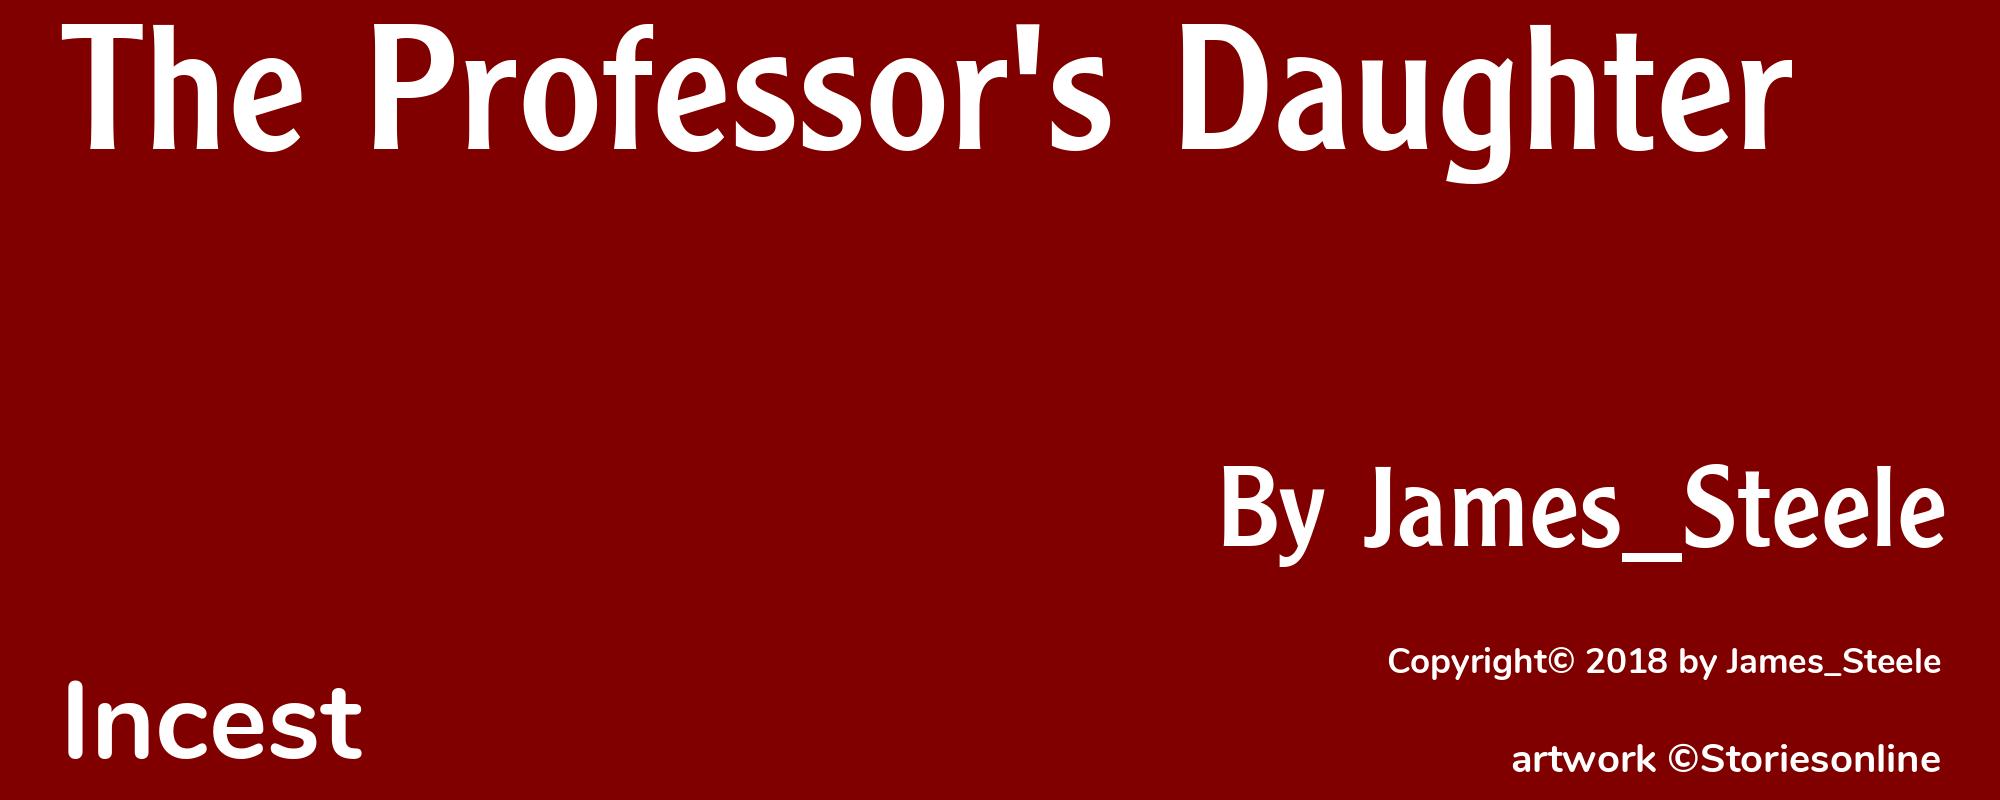 The Professor's Daughter - Cover